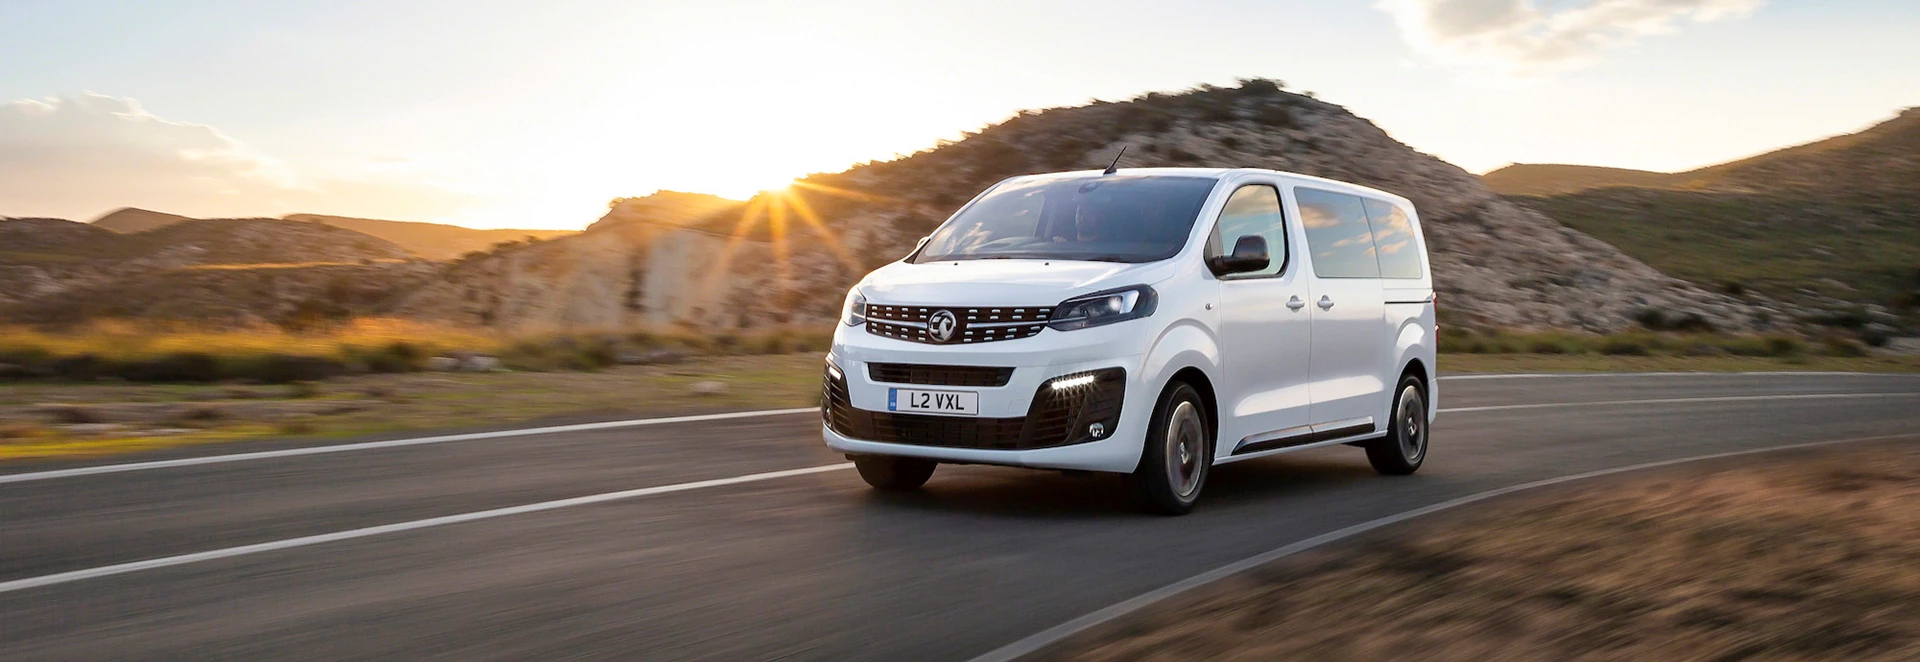 Vauxhall takes covers off new MPV – the Vivaro Life